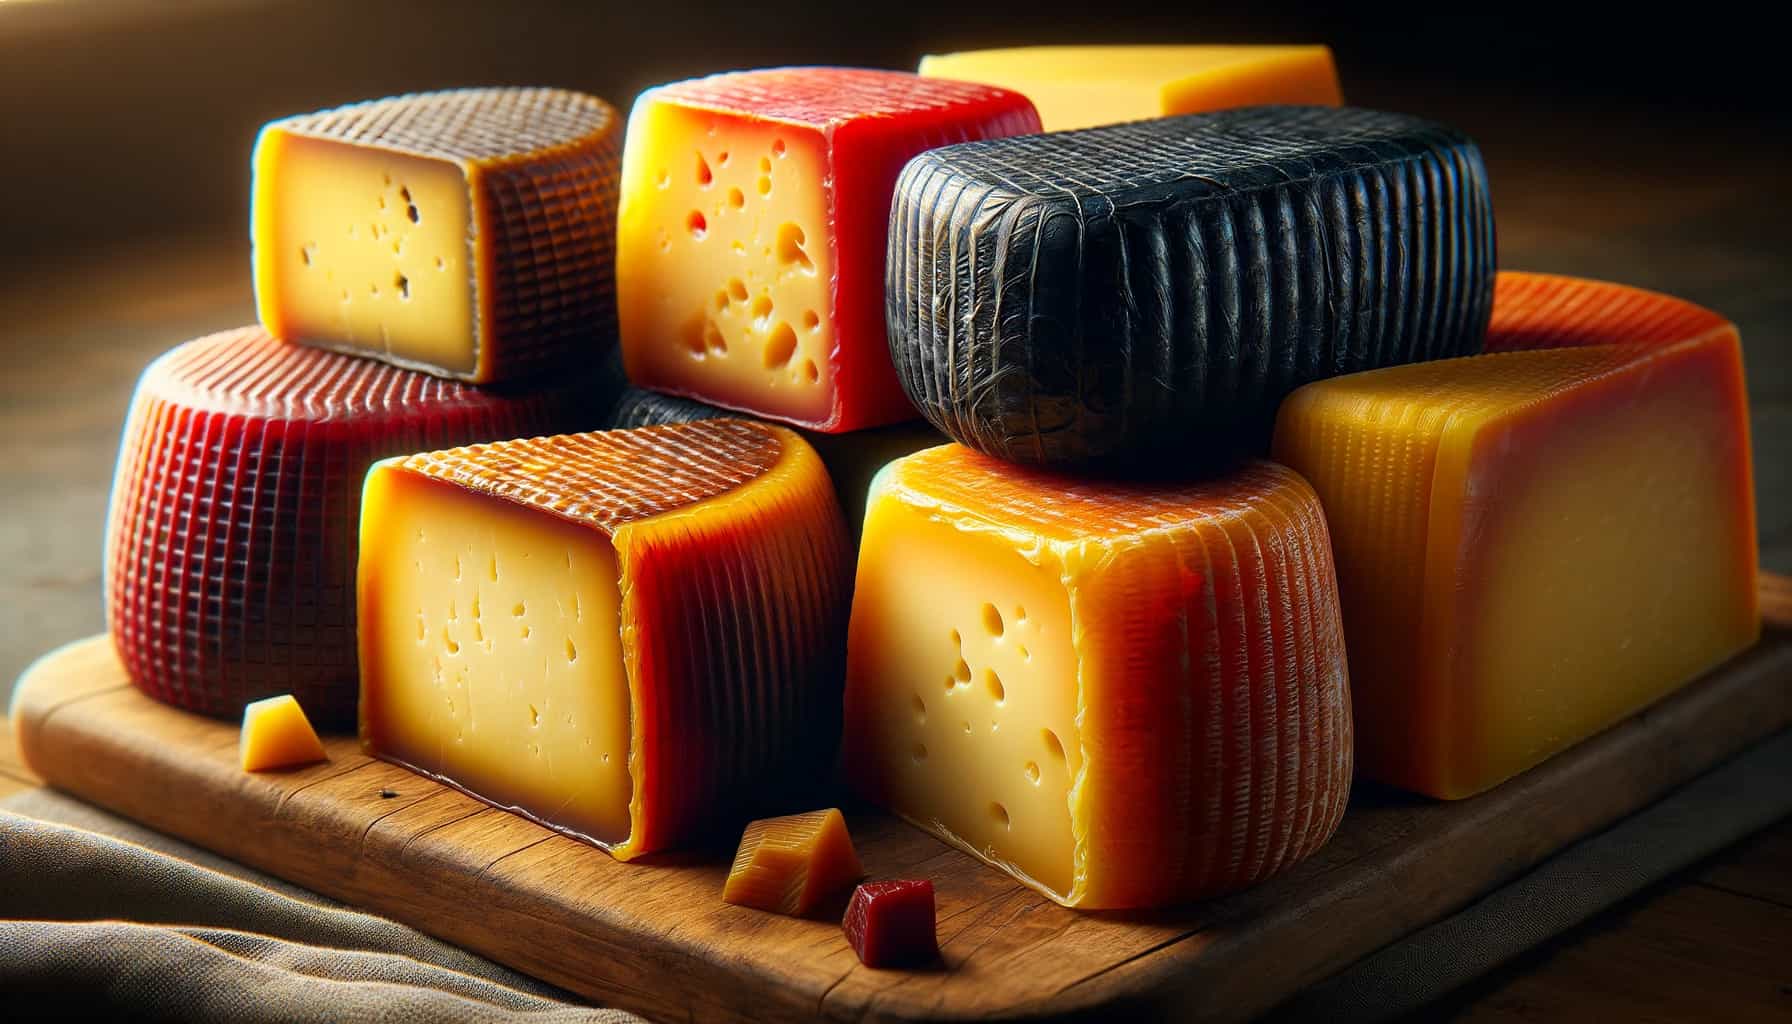 Hard cheeses encased in wax